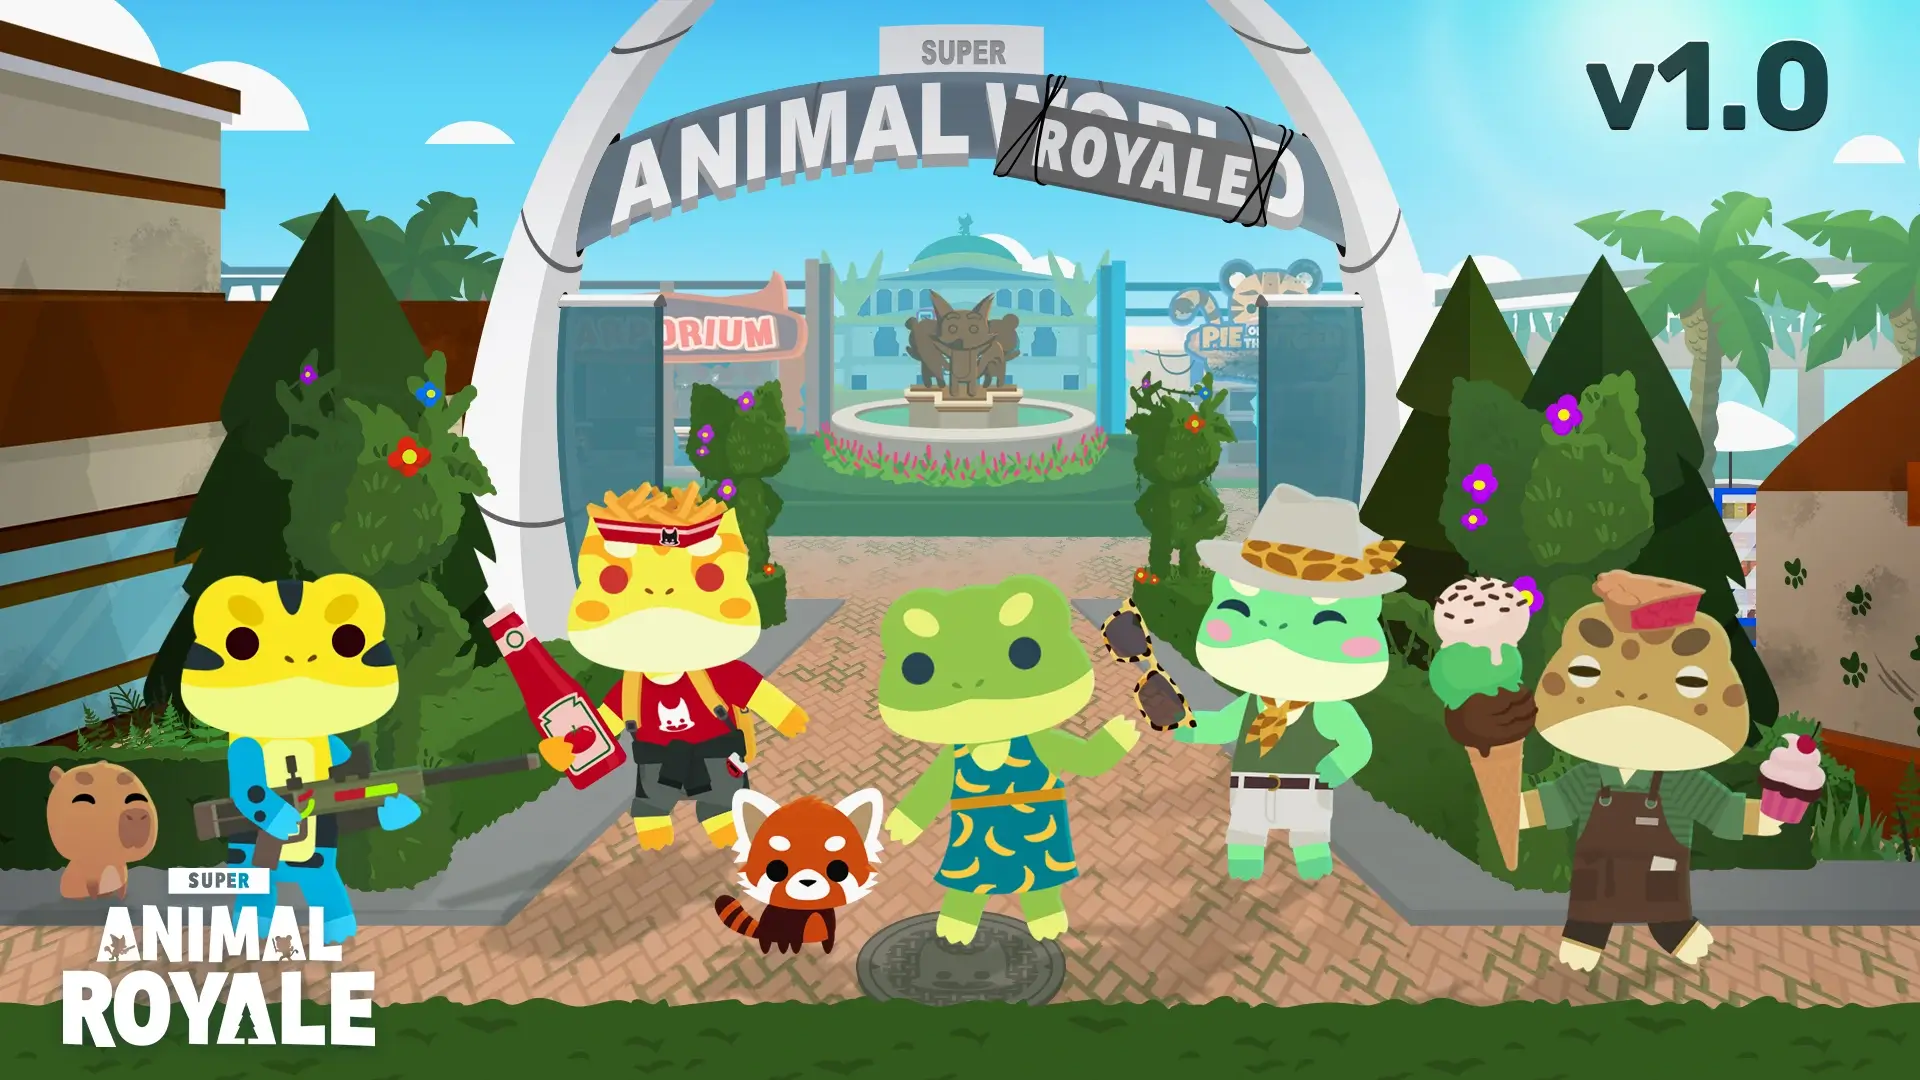 Super Animal Royale Game Booster: Boost Super Animal Royale